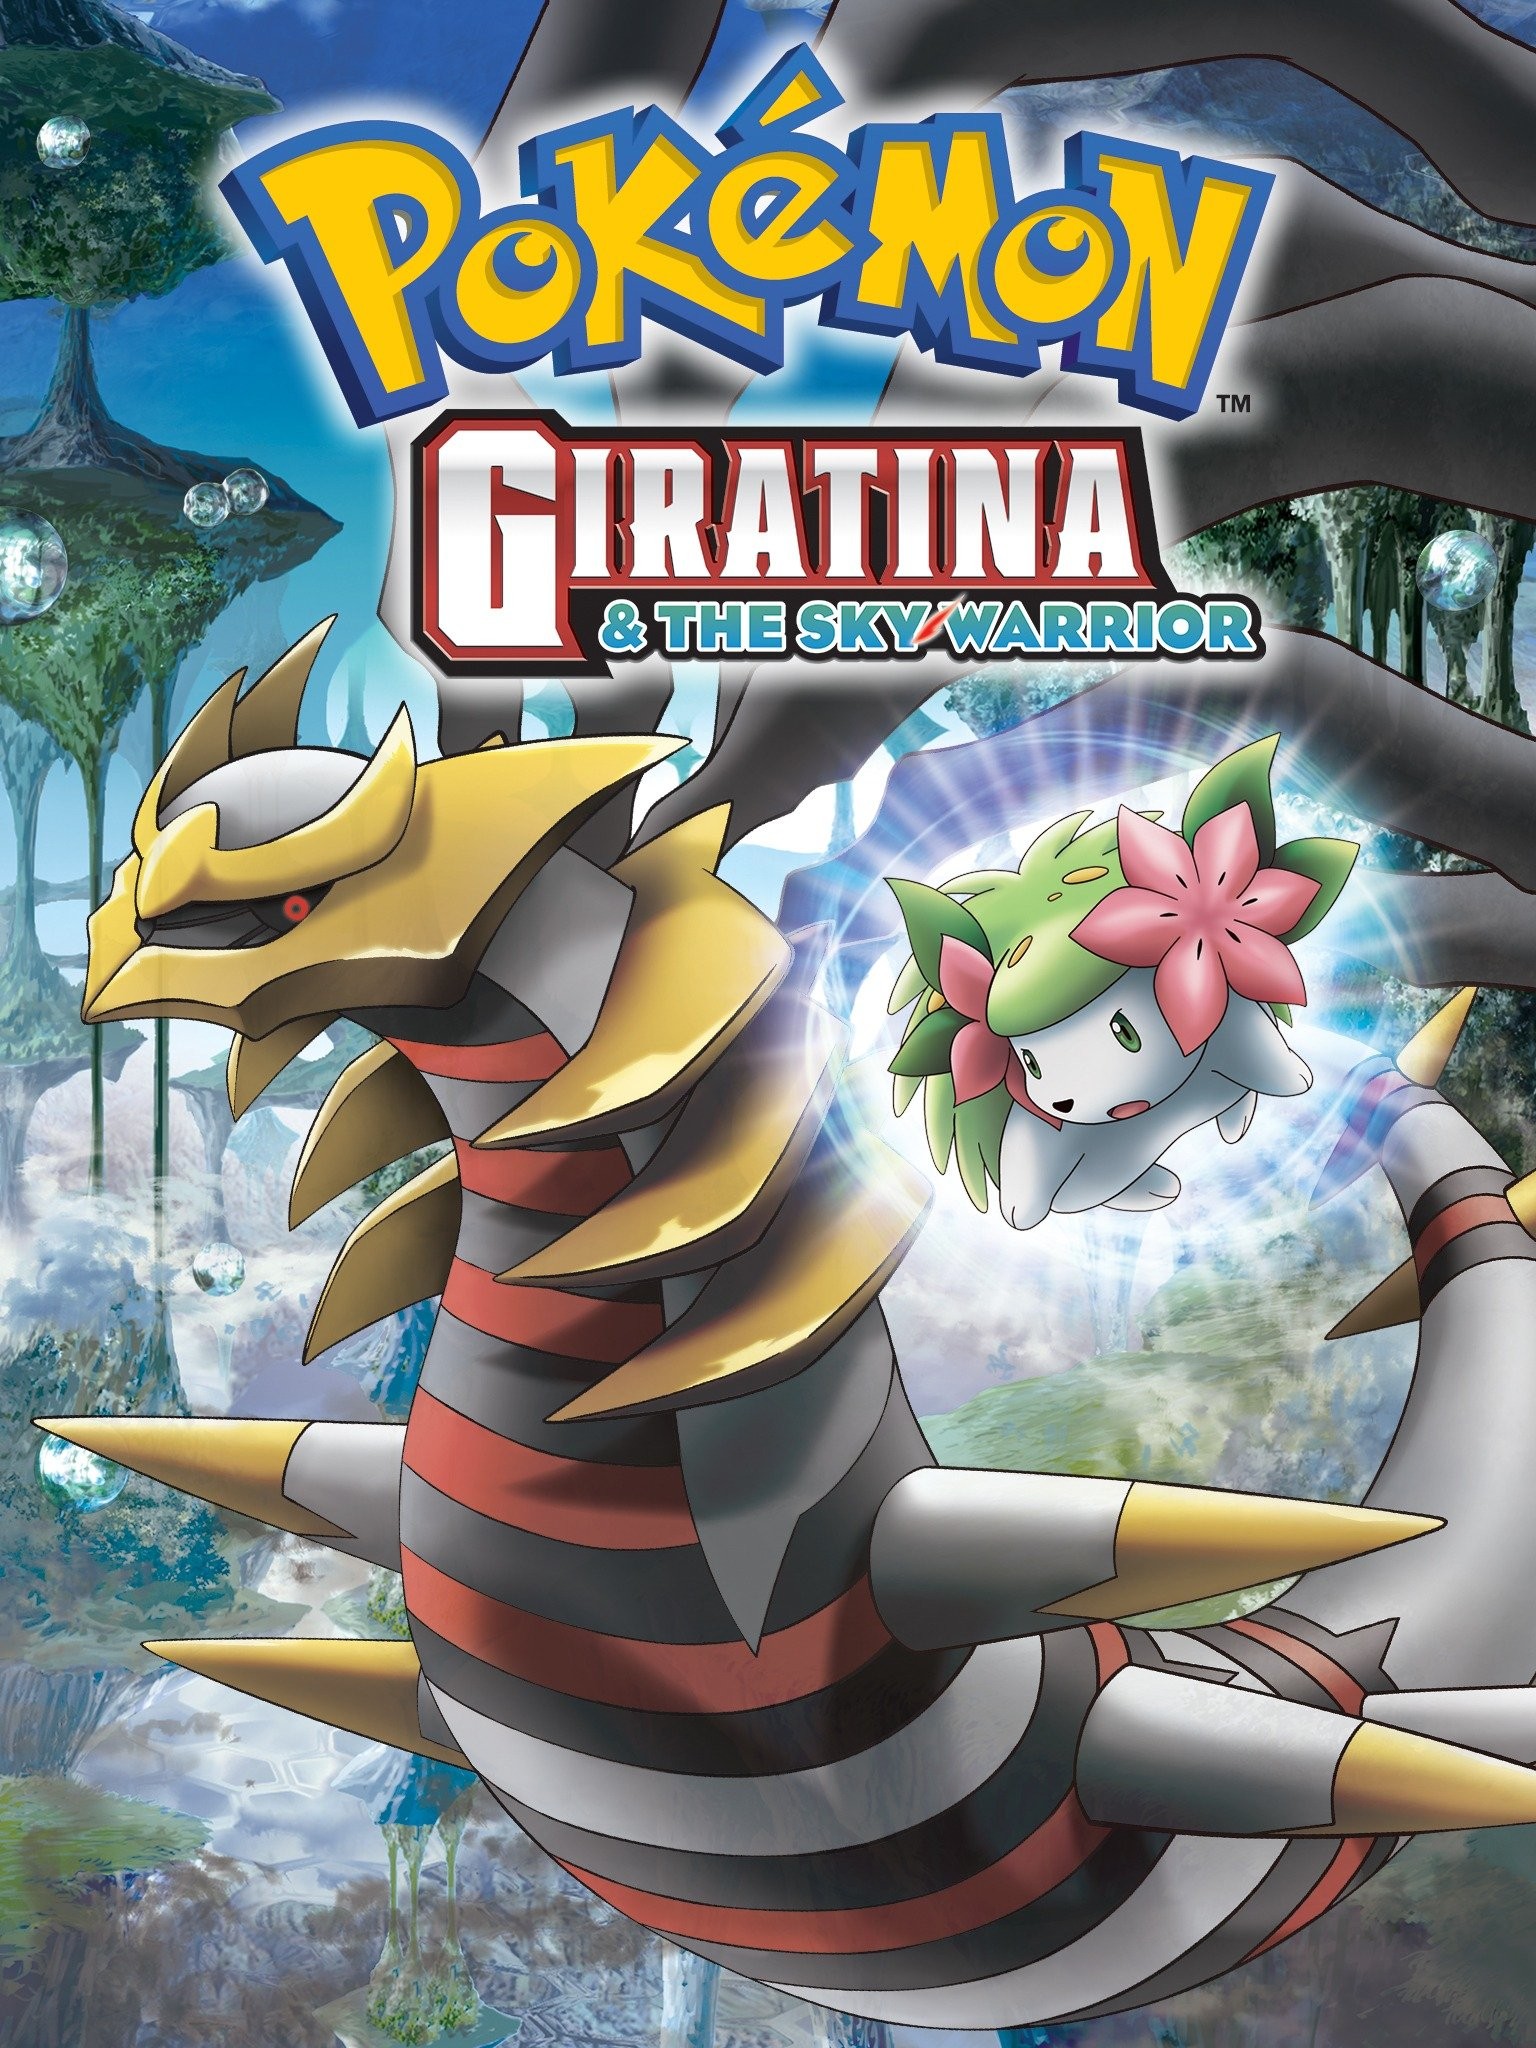 Giratina (movie) - Bulbapedia, the community-driven Pokémon